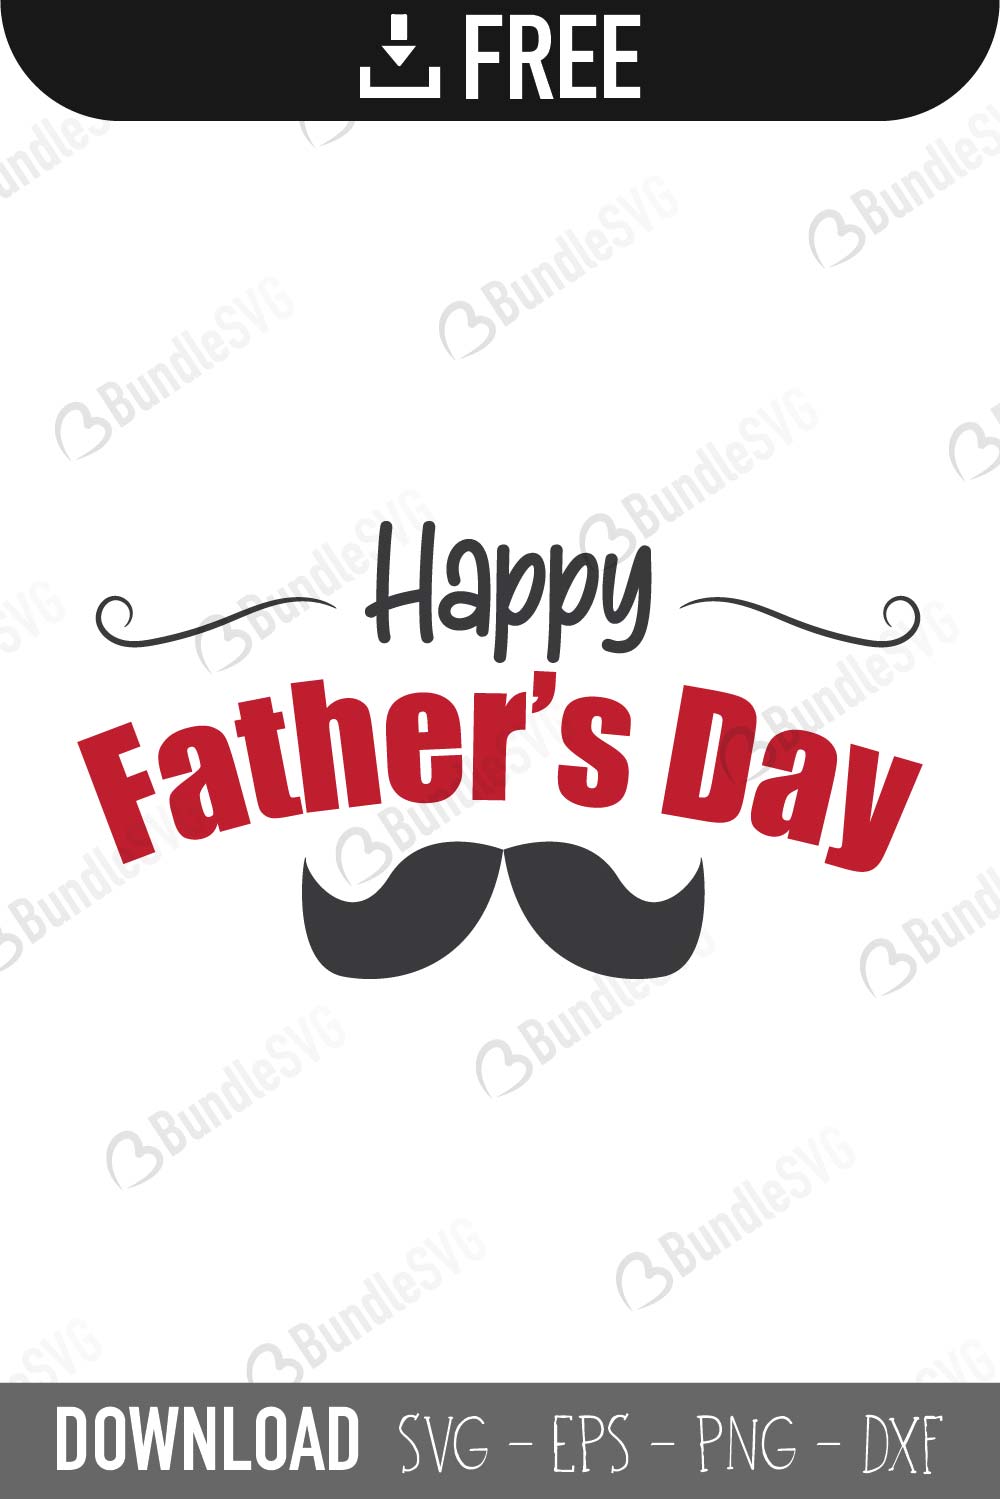 Download Father's Day SVG Cut Files Free Download | BundleSVG